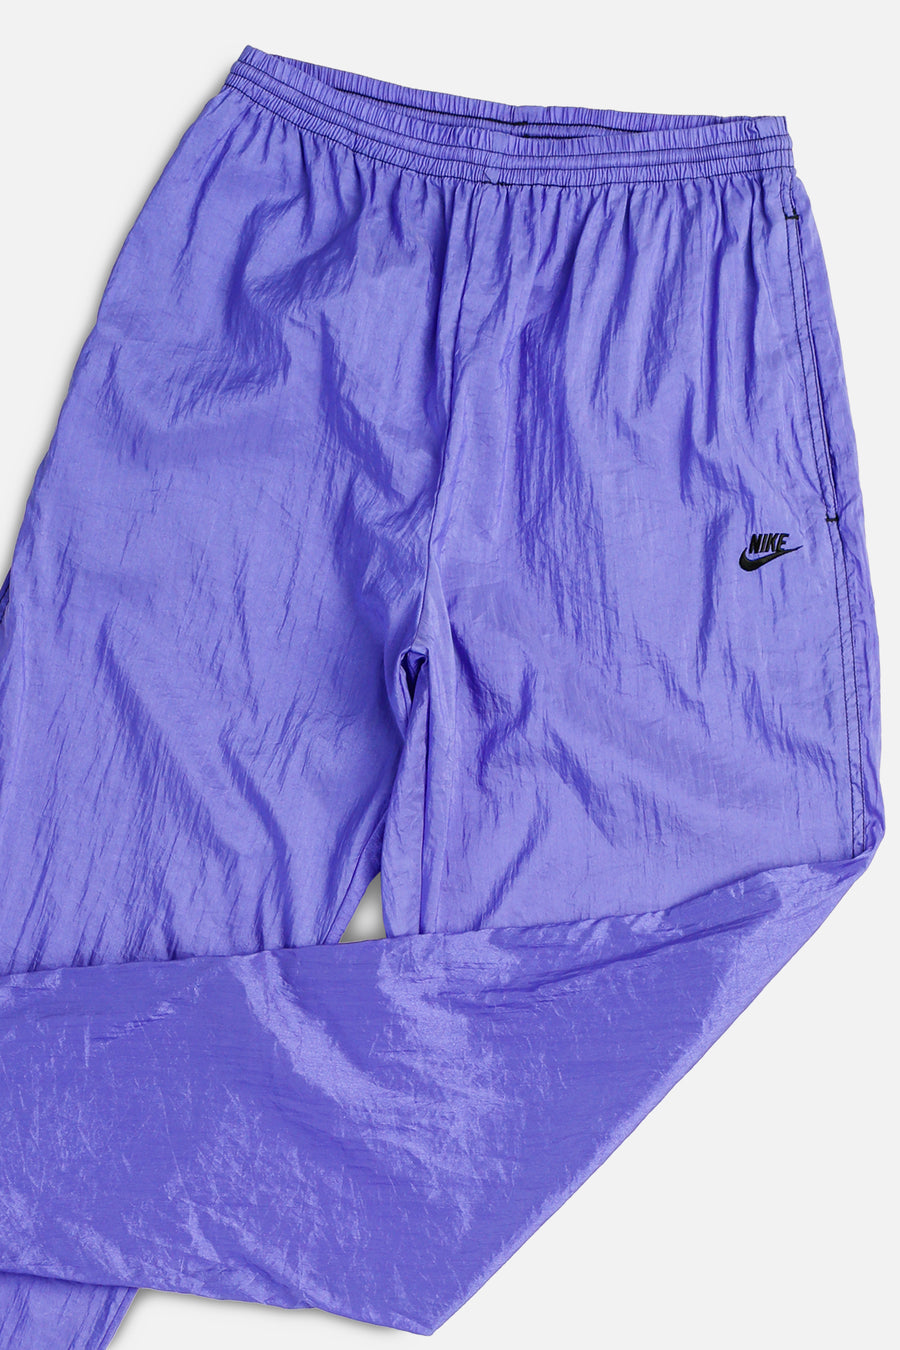 Vintage Nike Windbreaker Pants - L